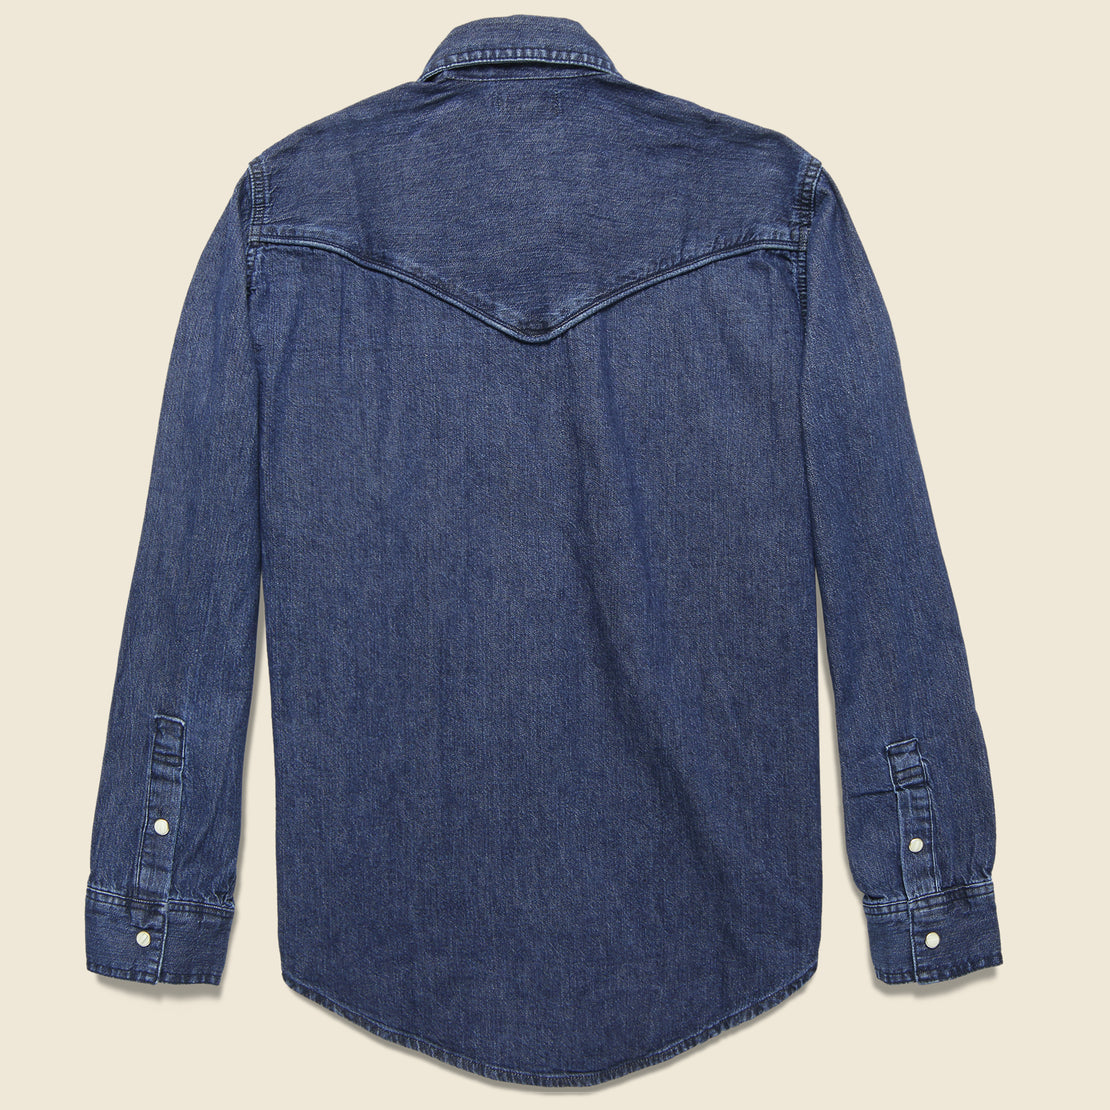 Dori Western Shirt - Doubt It - Levis Premium - STAG Provisions - W - Tops - L/S Woven